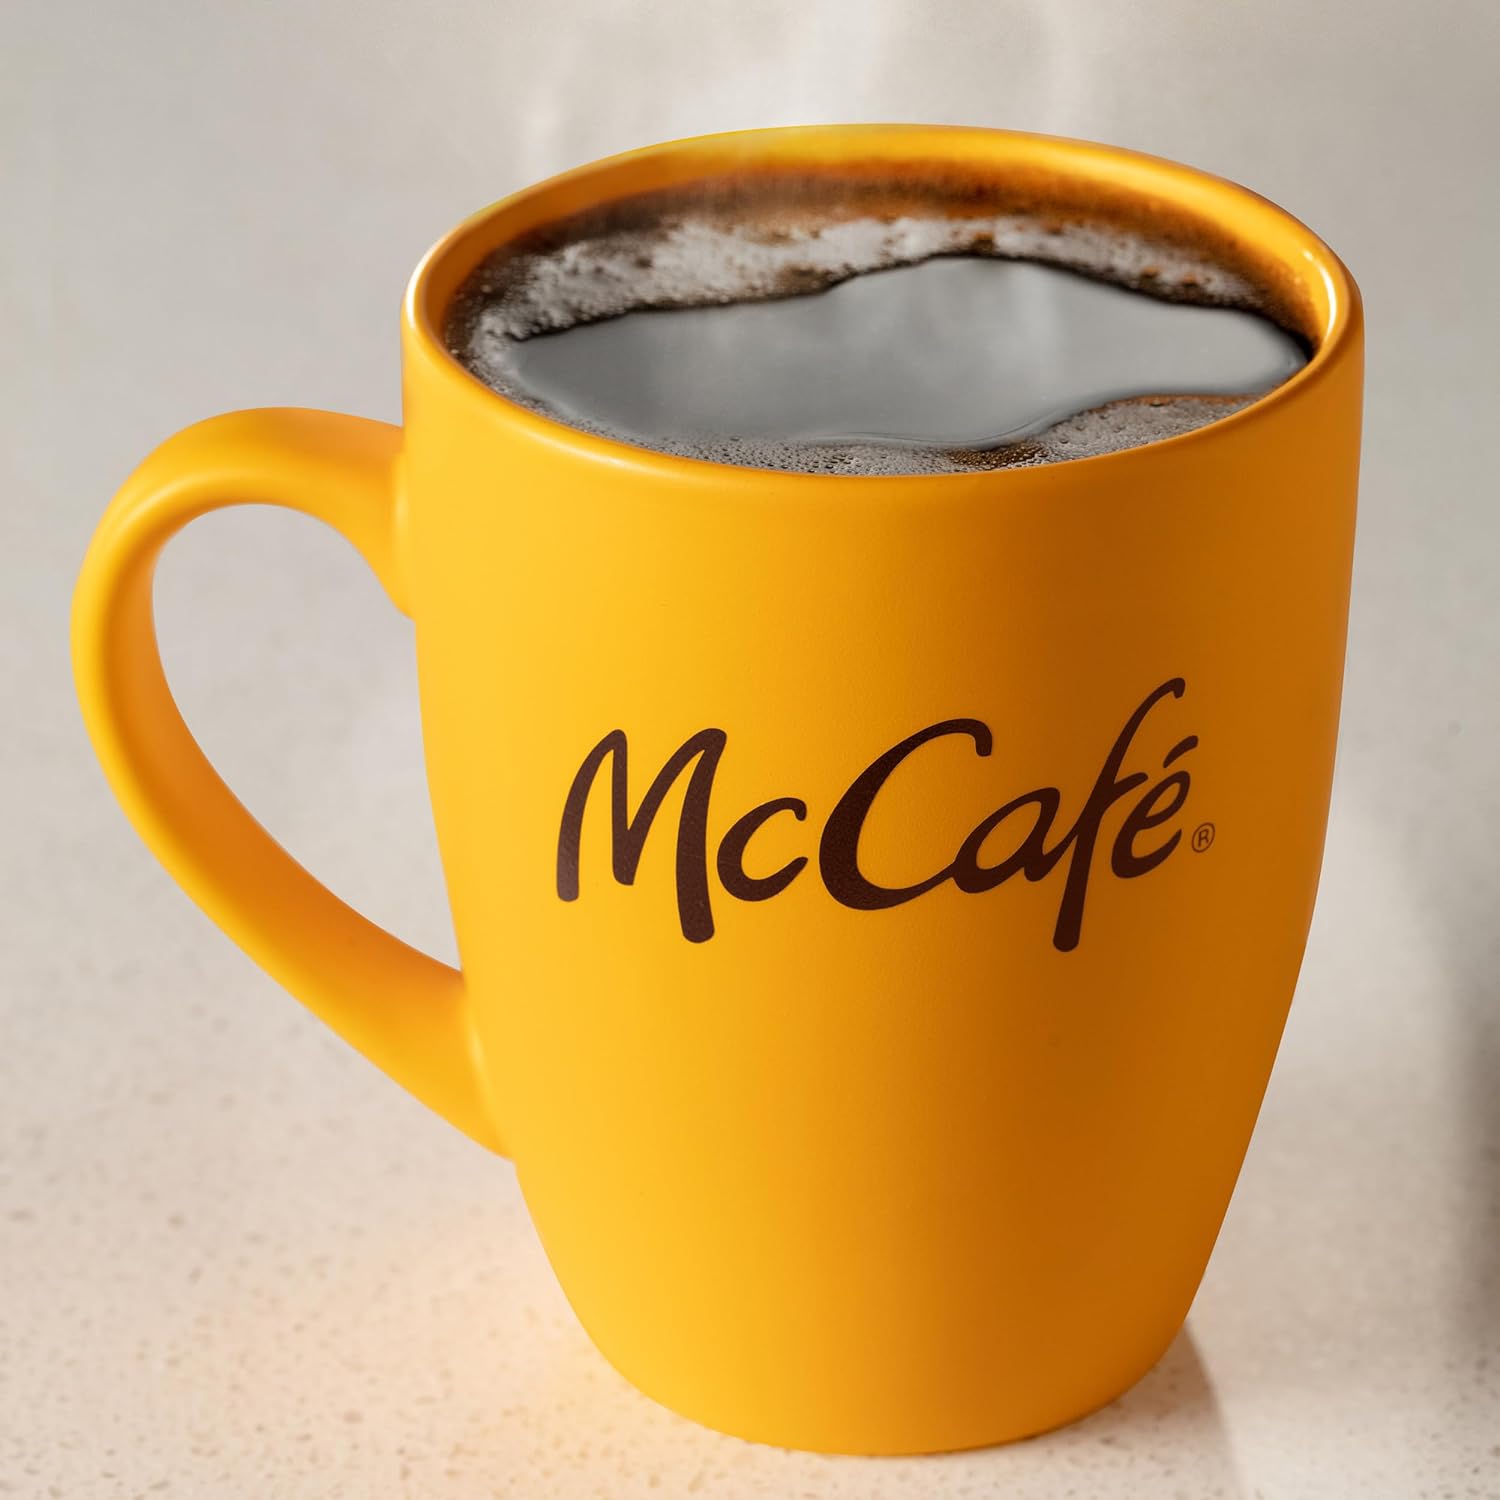 McCafe Premium Roast, Single-Serve Keurig K-Cup Pods, Medium Roast Coffee Pods Pods, 48 Count : Grocery & Gourmet Food